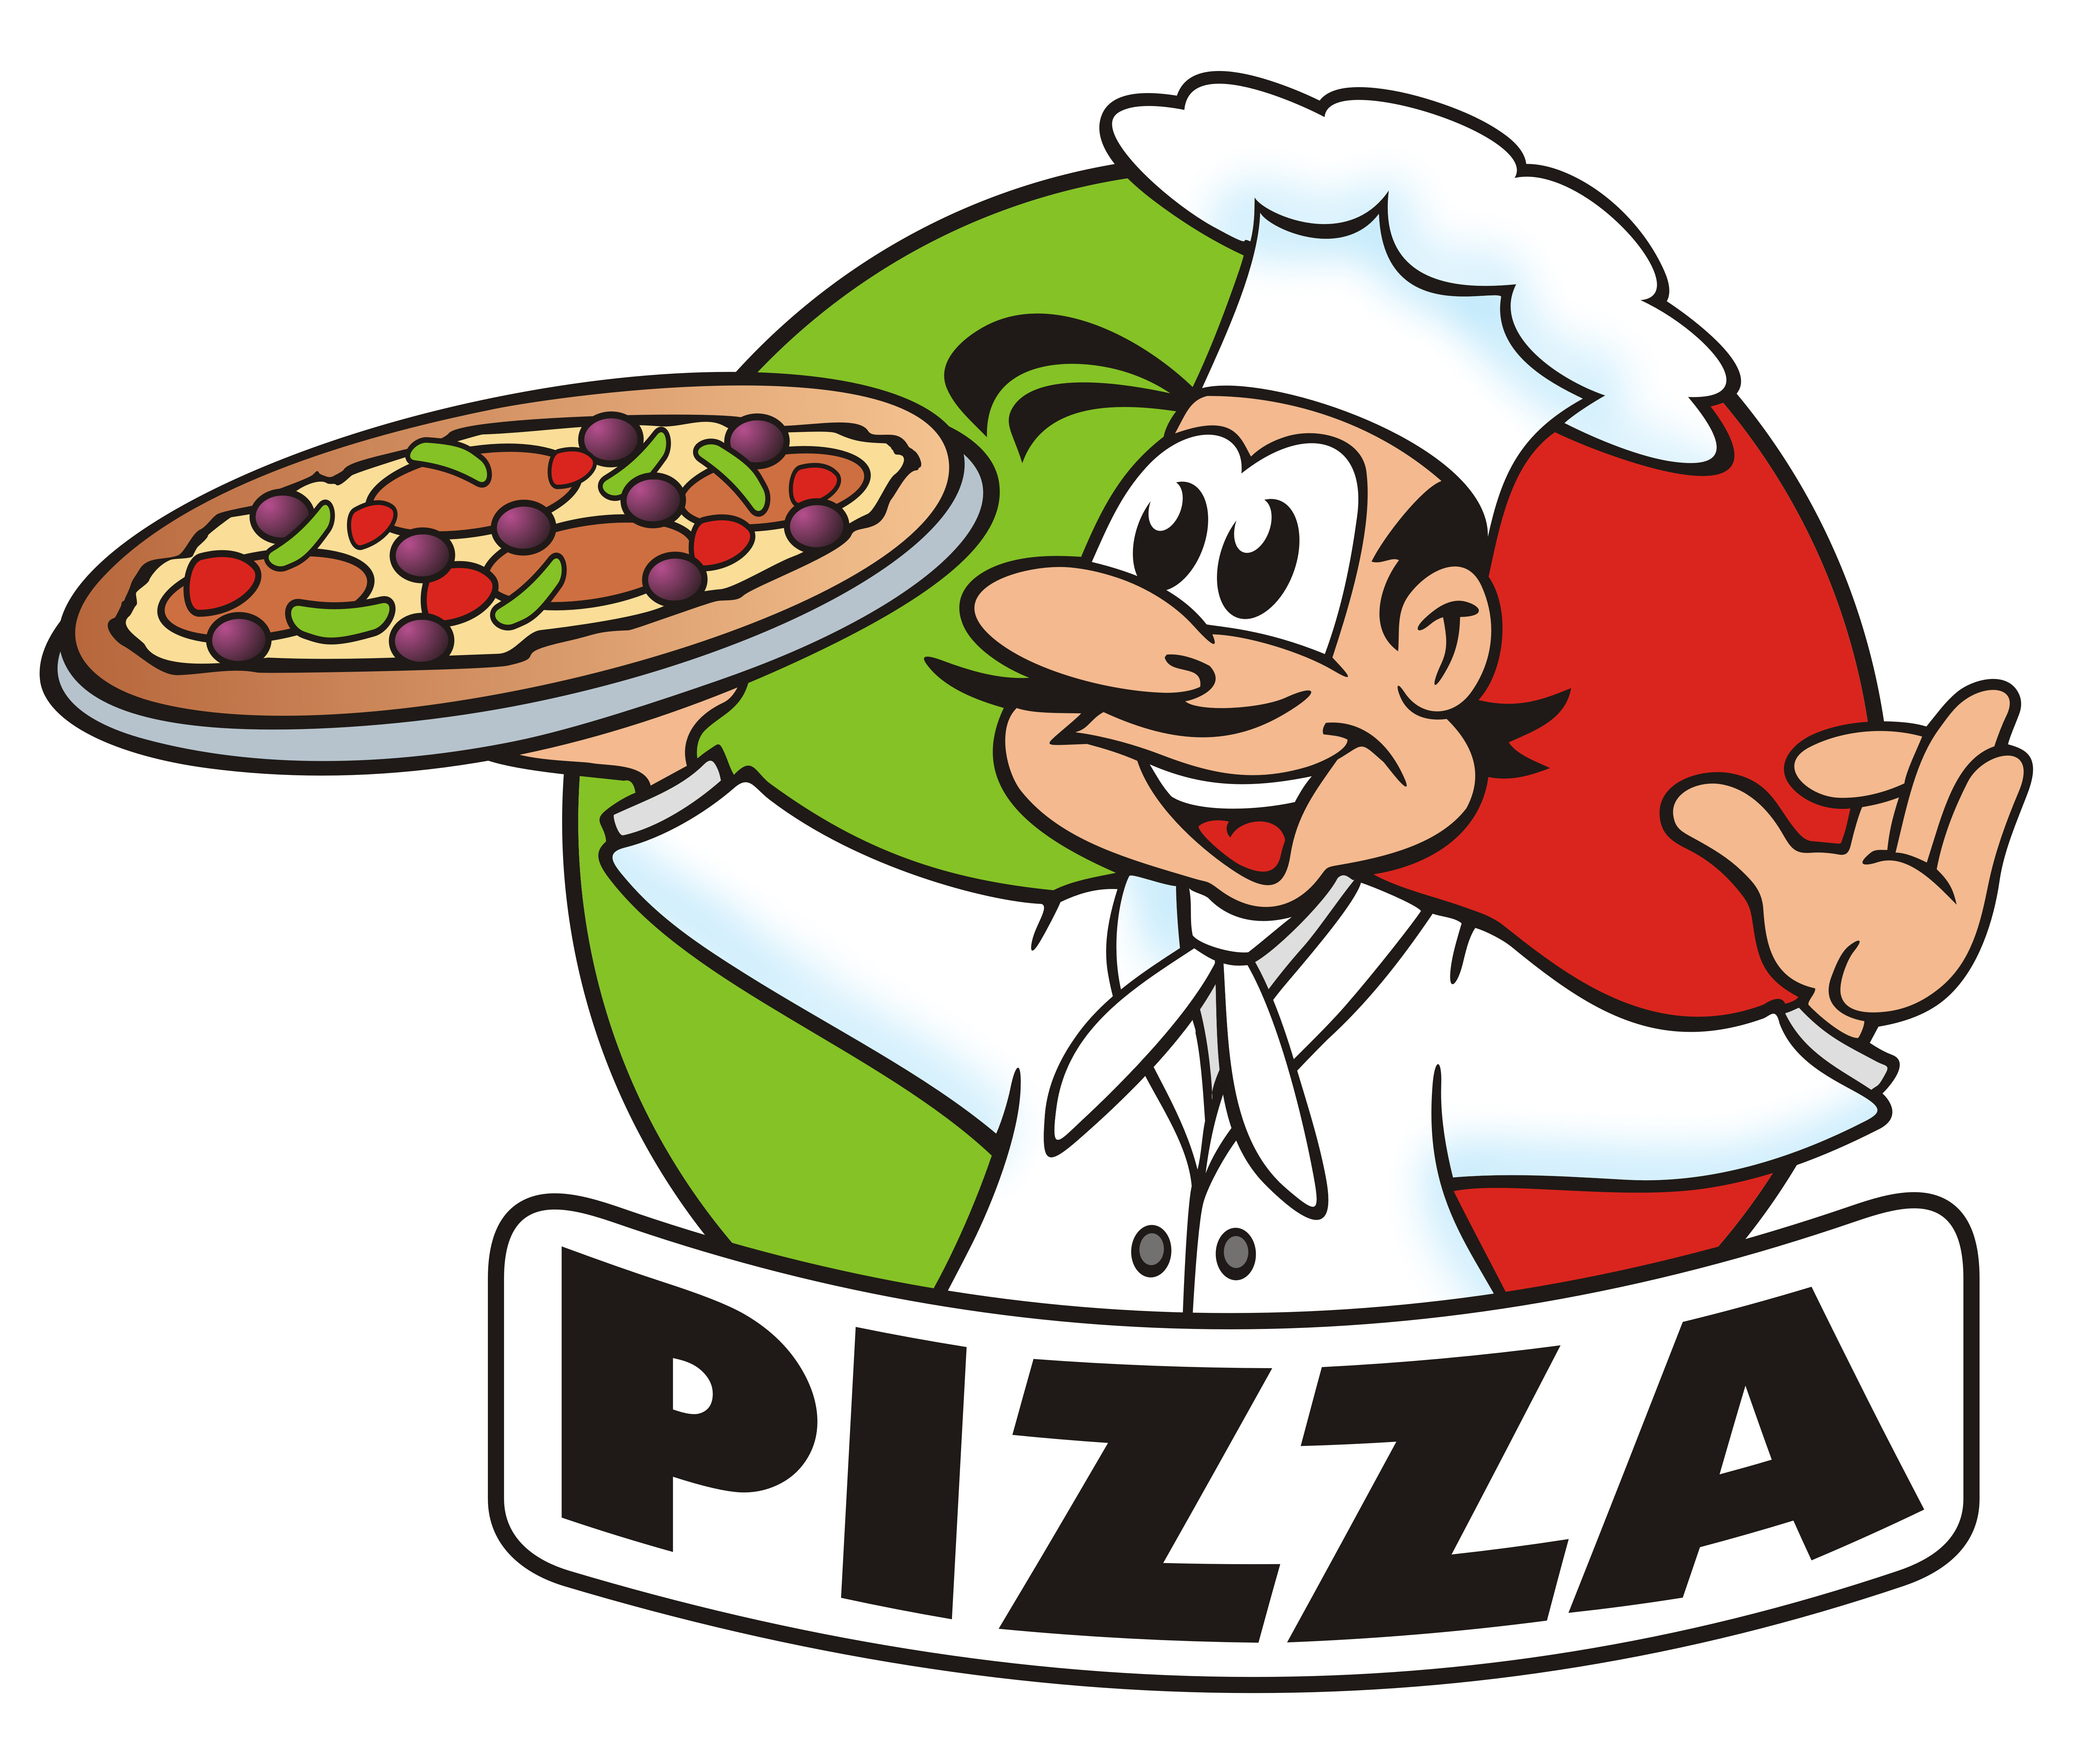 Pizza logo clipart